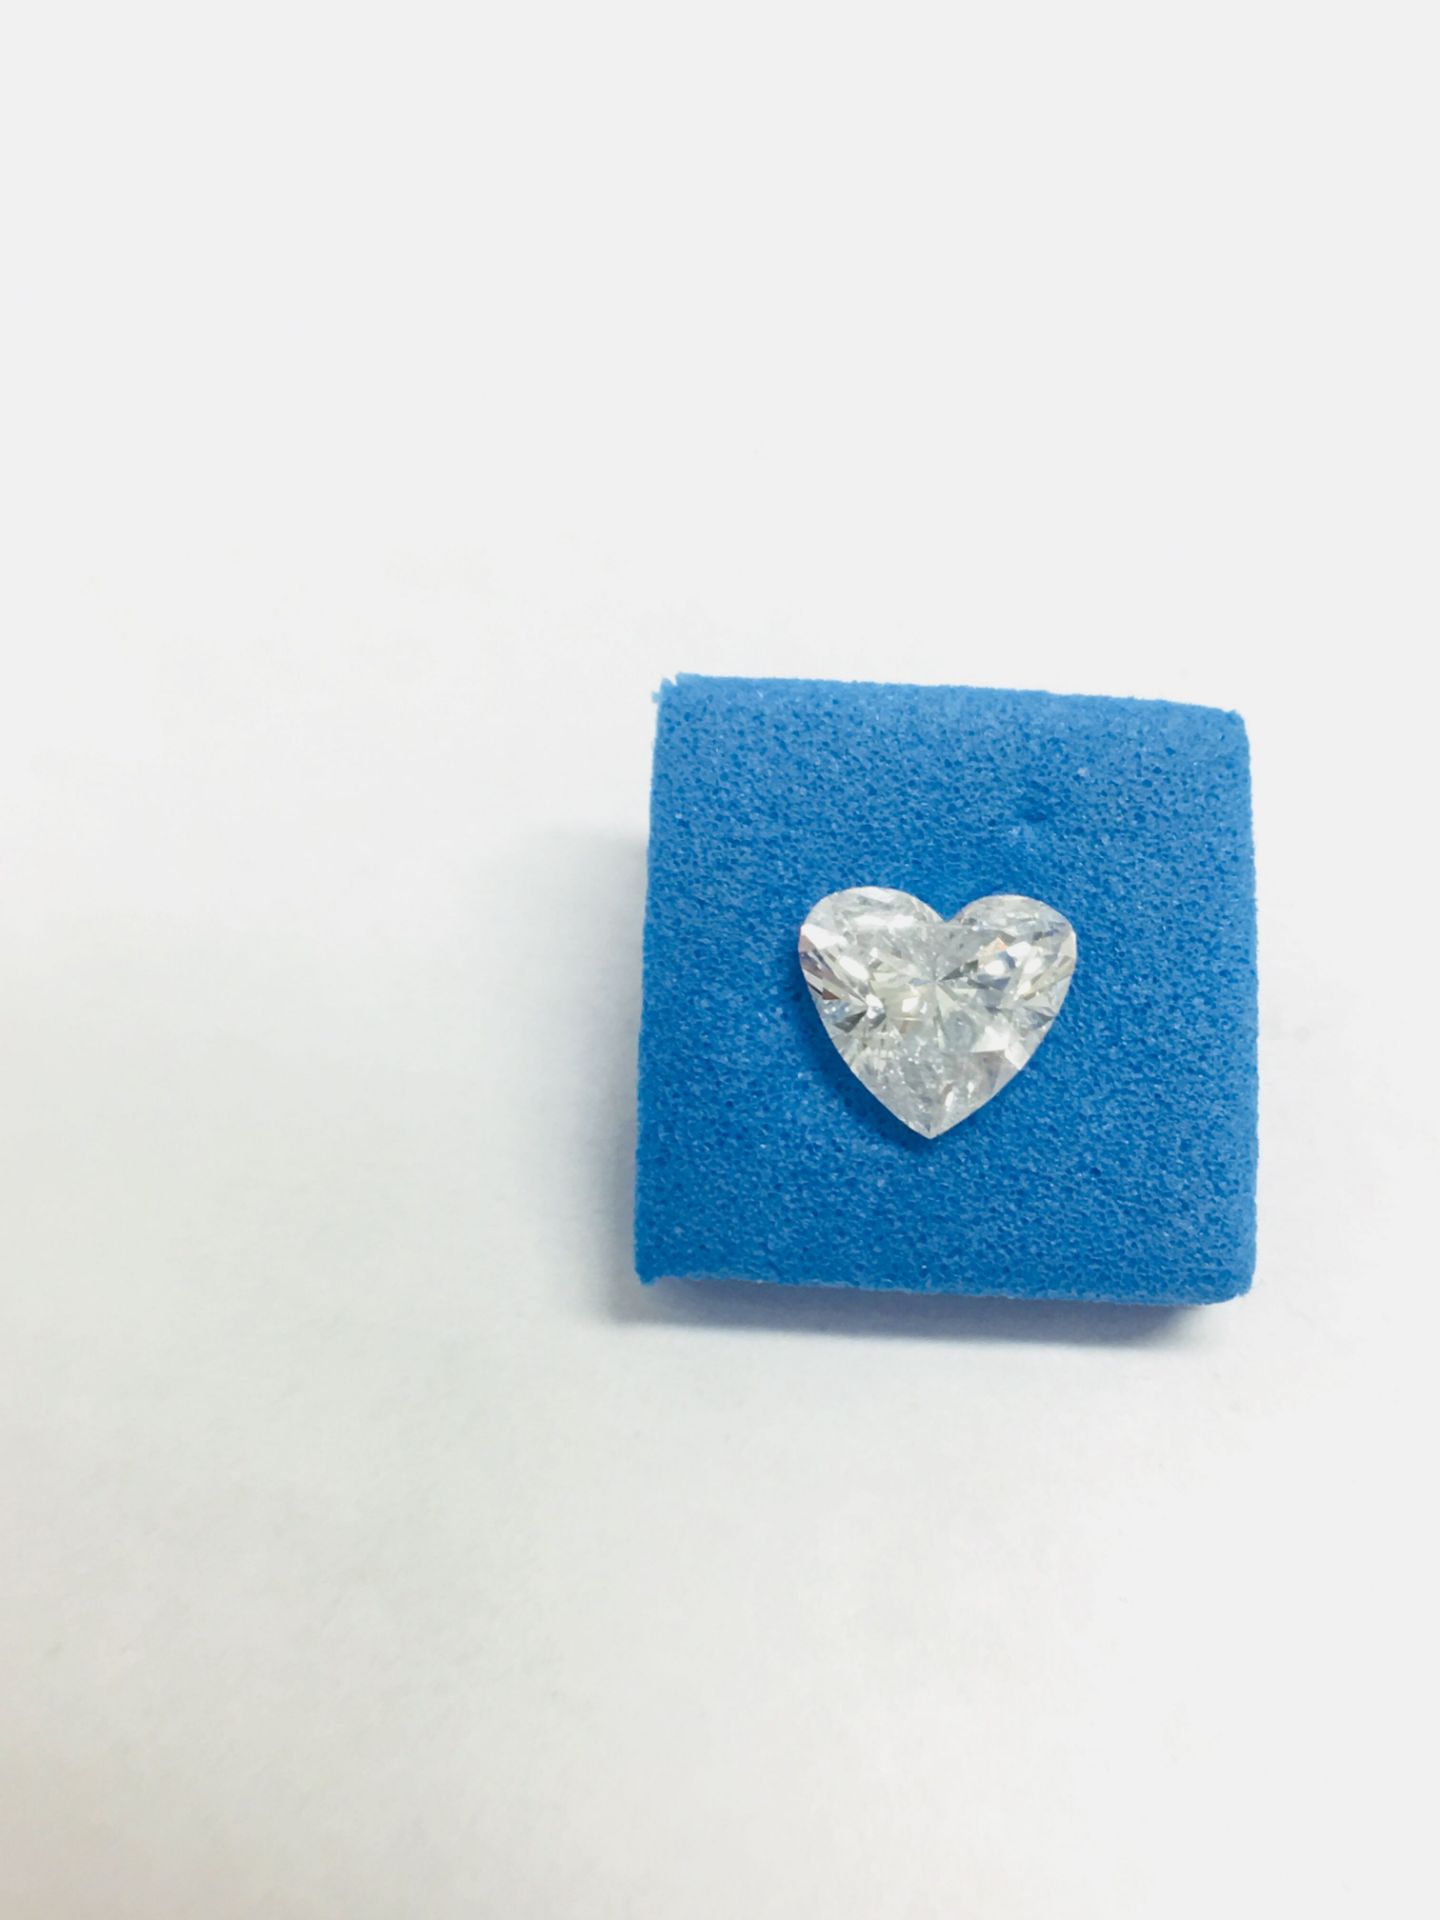 1.01Ct Heartshape Natural Diamond - Image 2 of 2